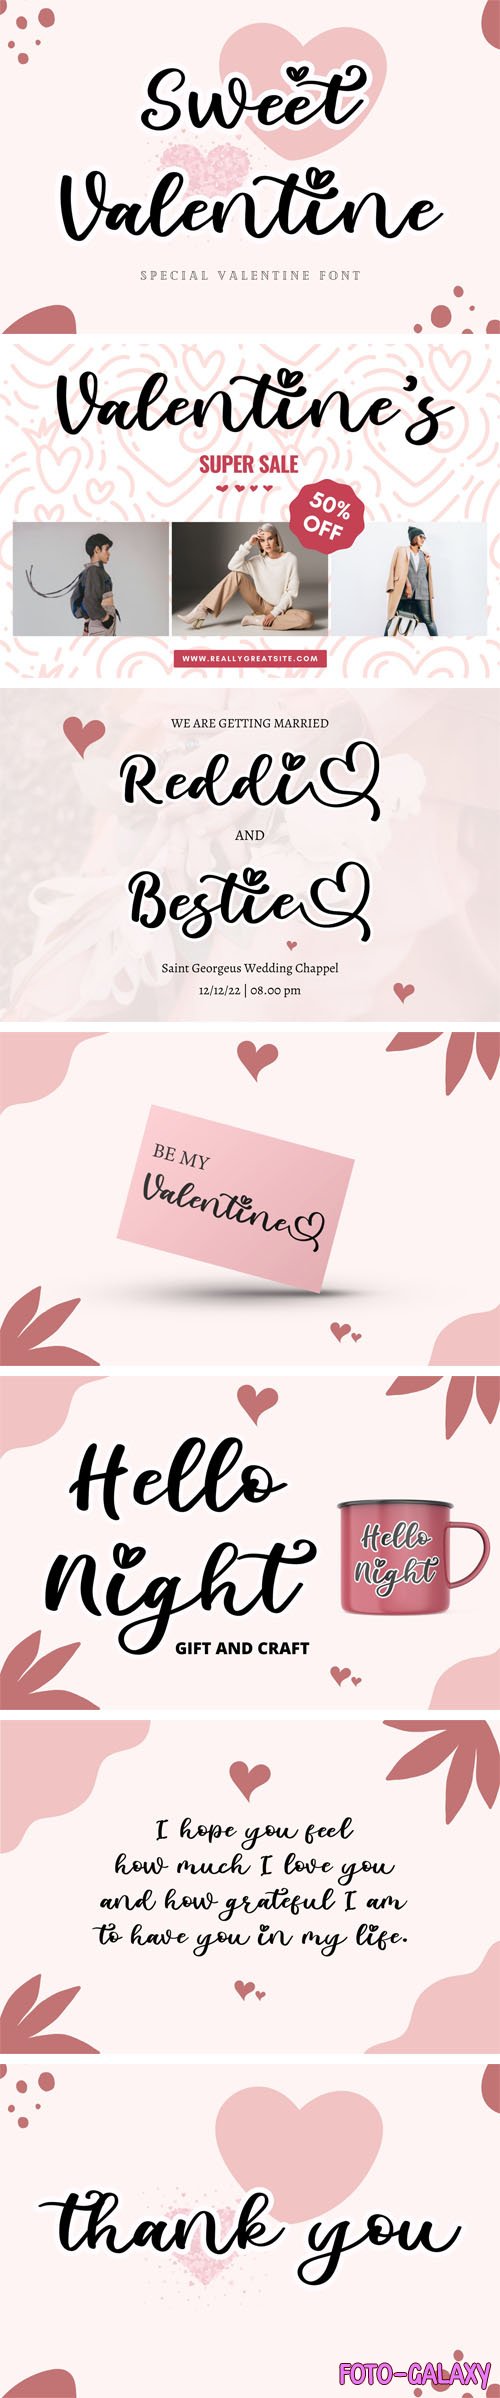 Sweet Valentine - Romantic Handwritten Font